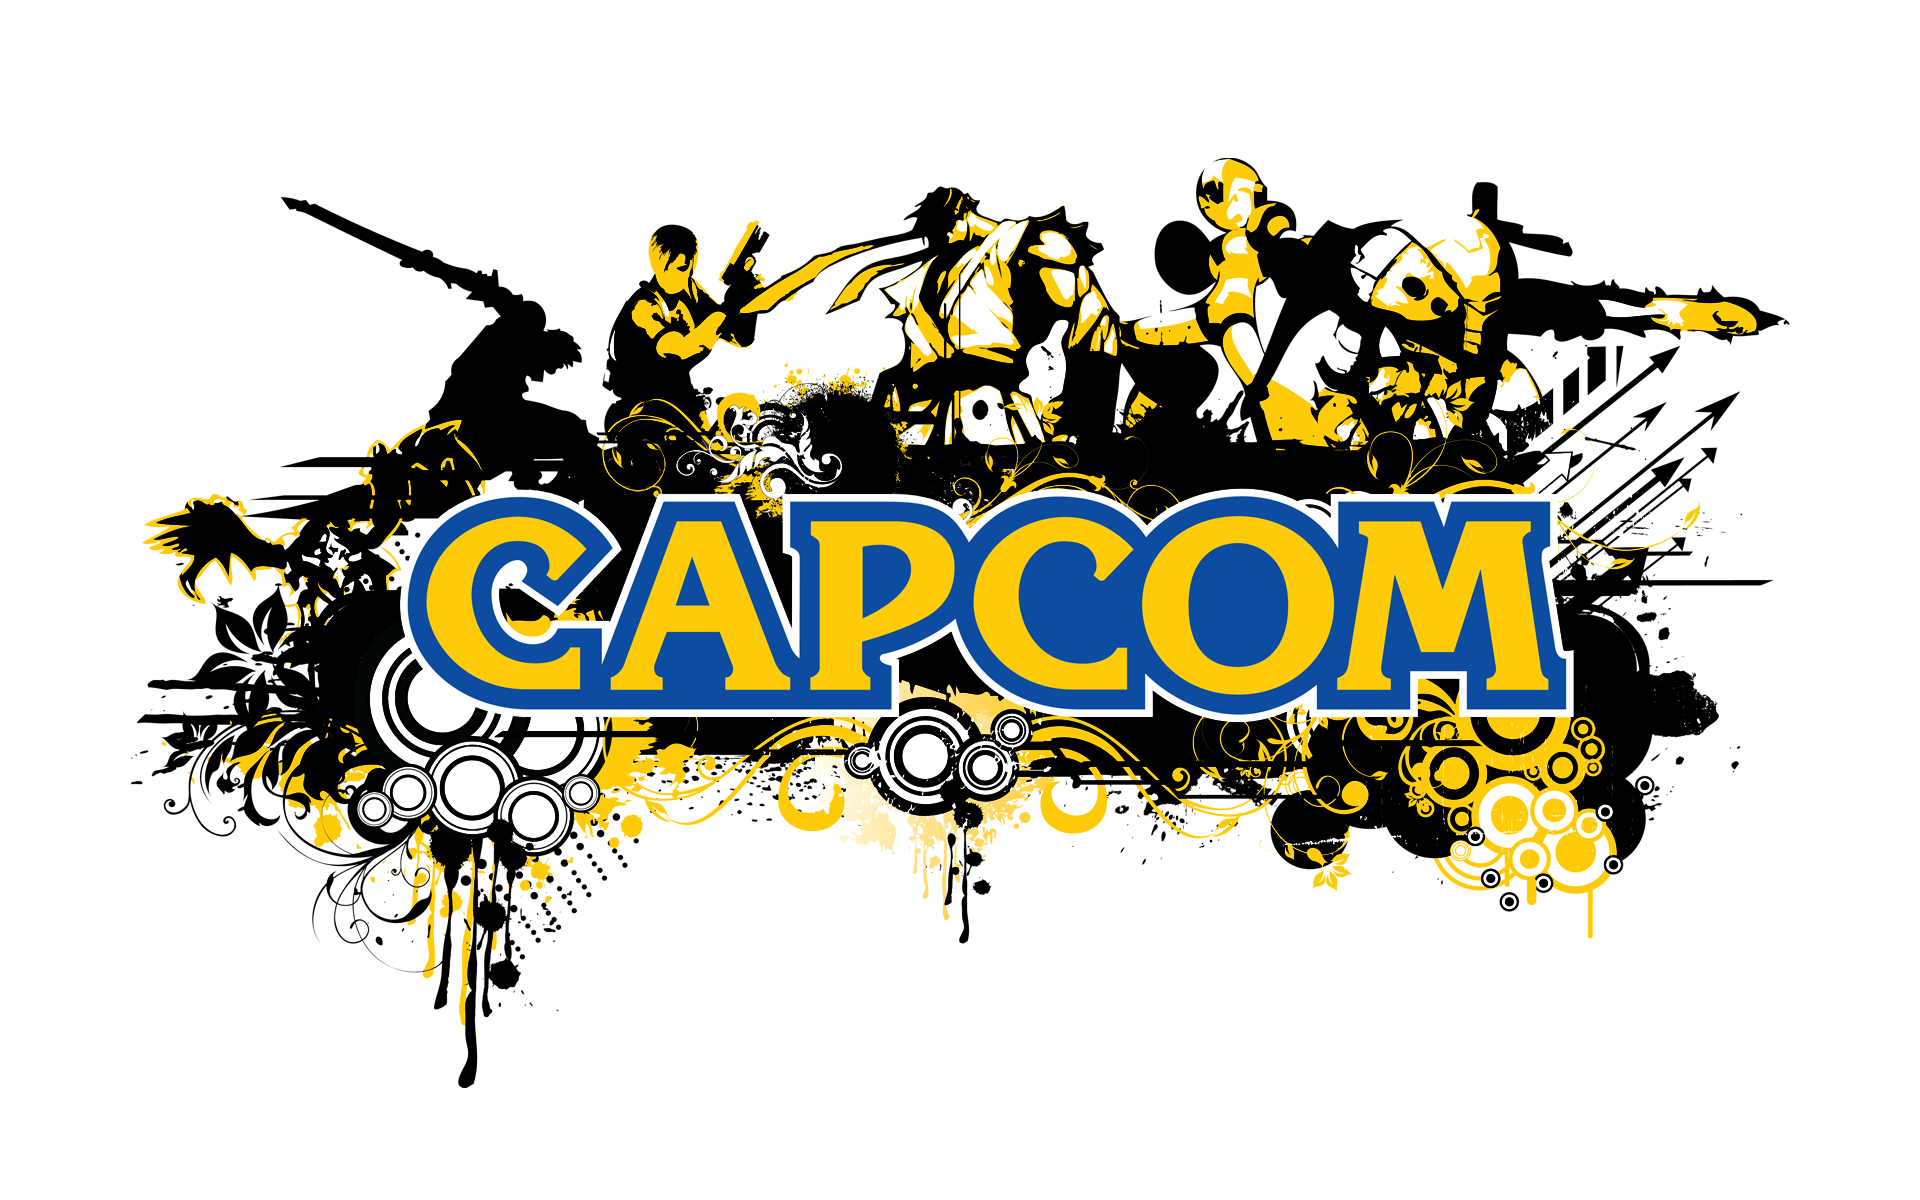 What should Capcom port next?